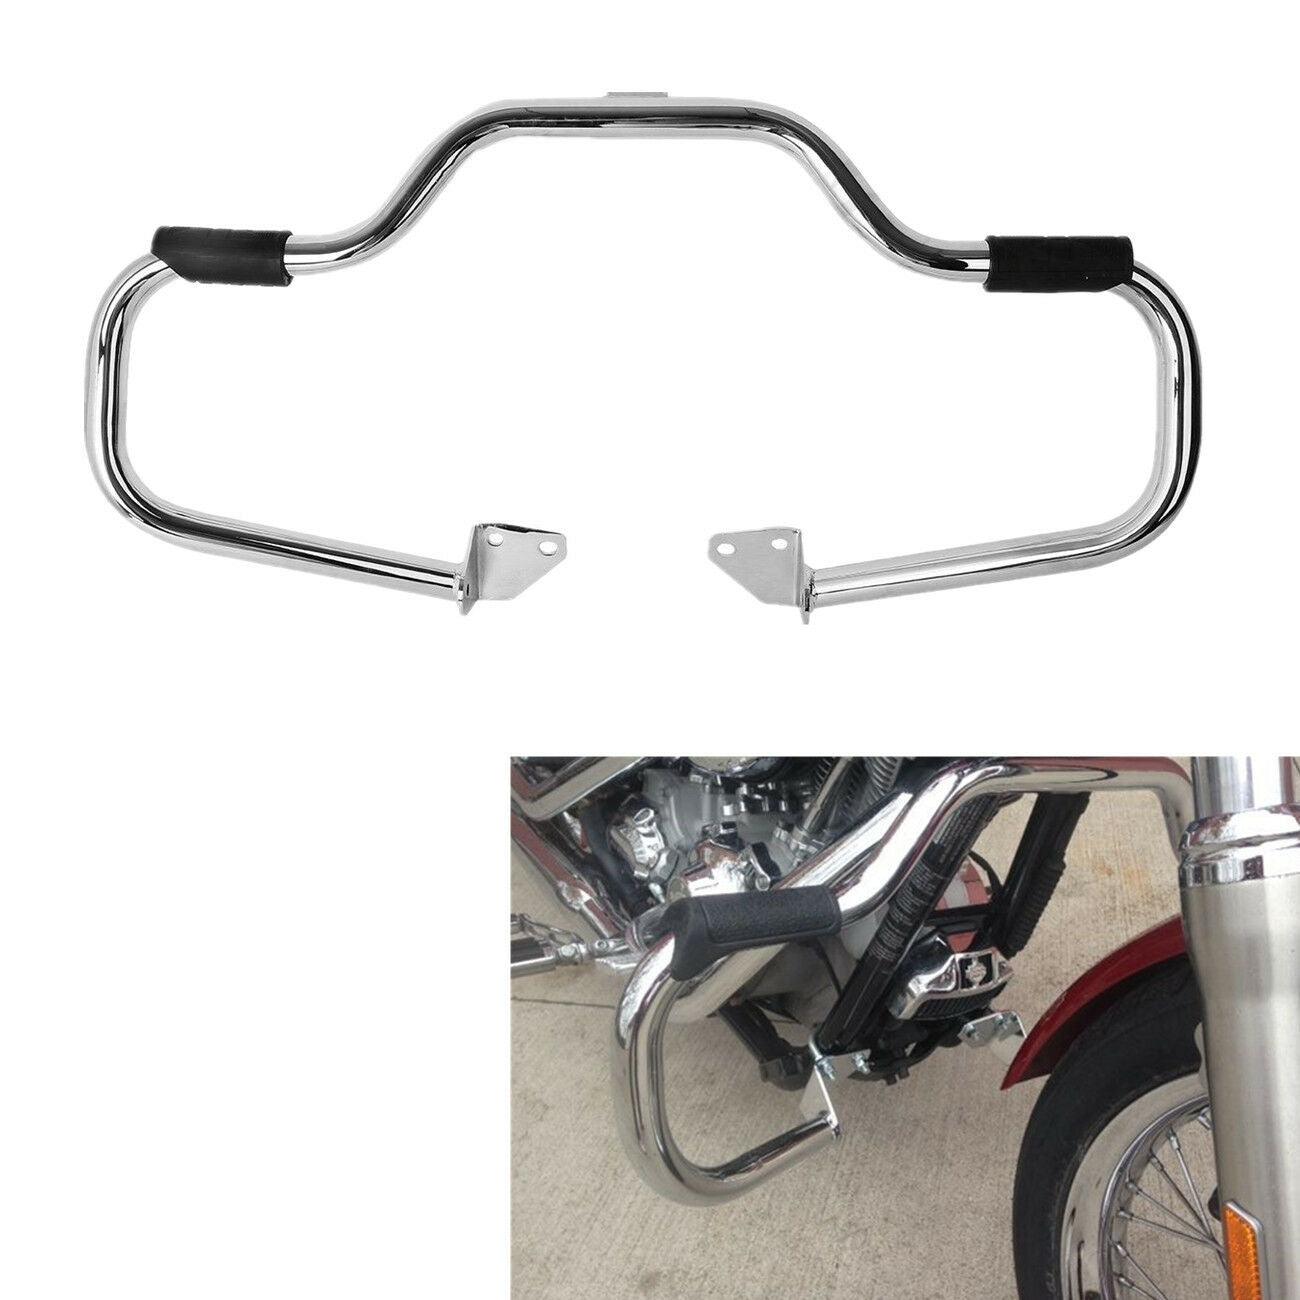 1 1/4" Engine Guard Crash Bar Fit For Harley Dyna Super Glide Custom FXDC 07-14 - Moto Life Products